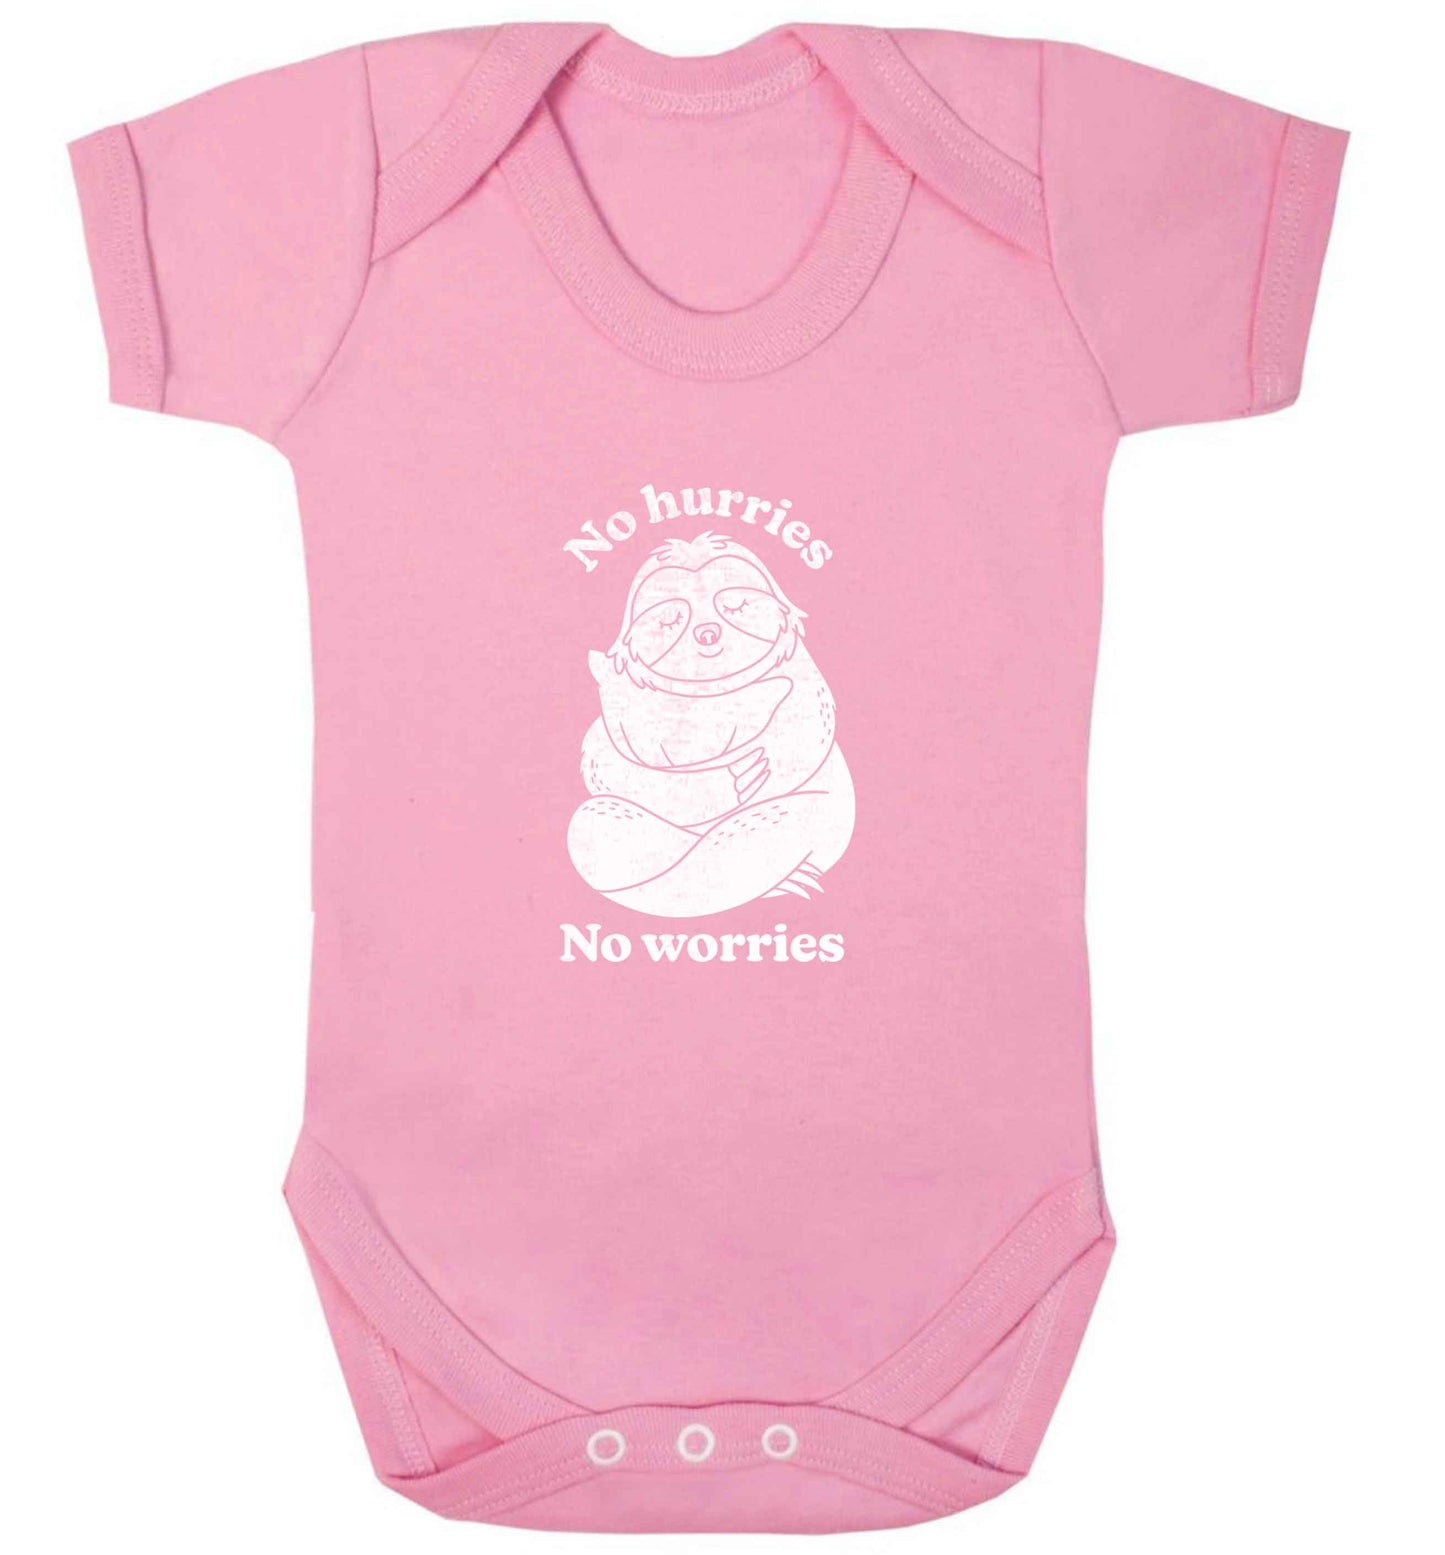 No hurries no worries baby vest pale pink 18-24 months